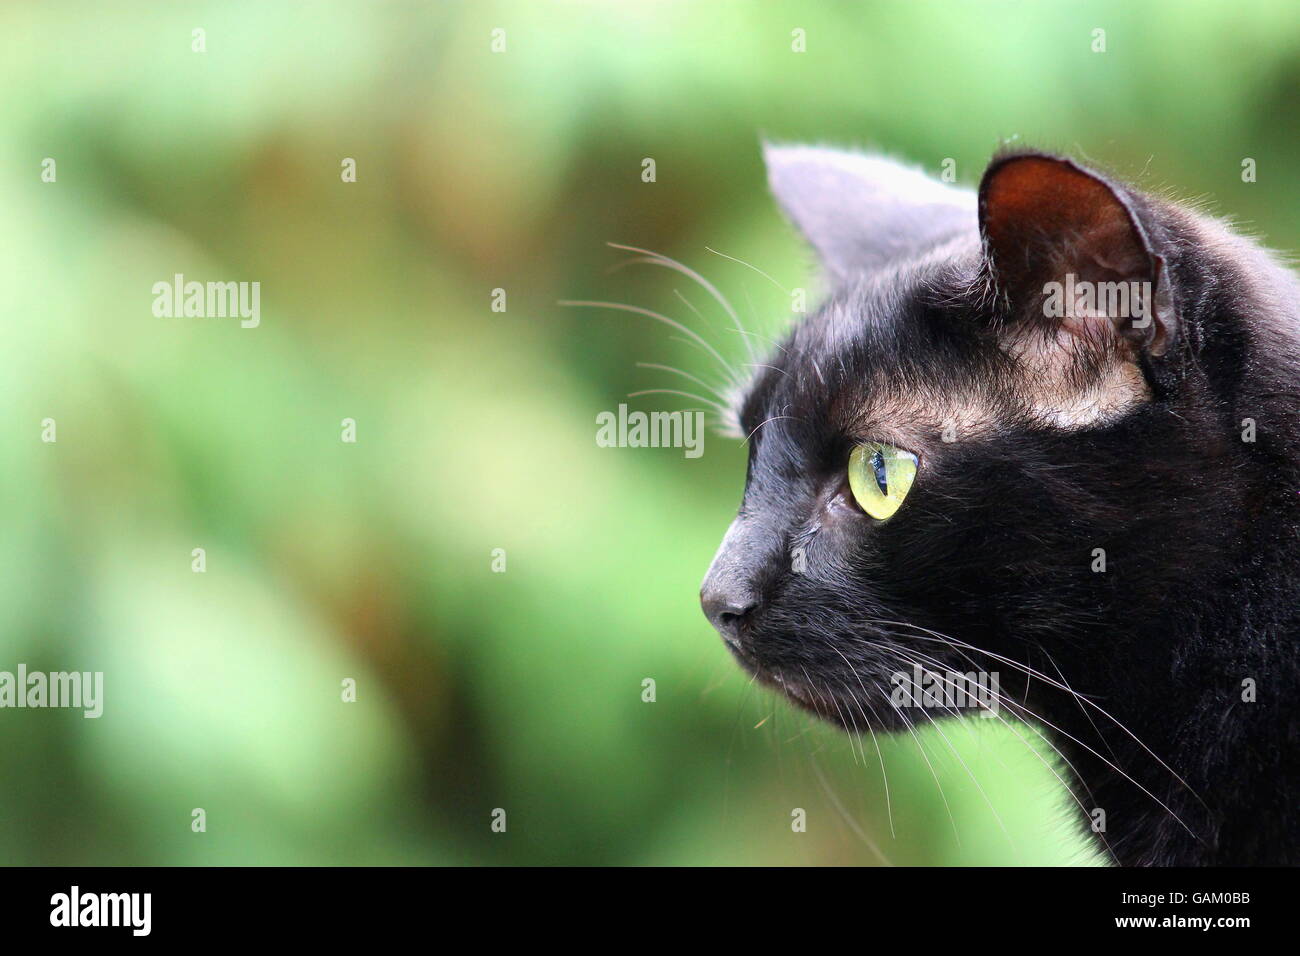 Black Cat with copy space Banque D'Images